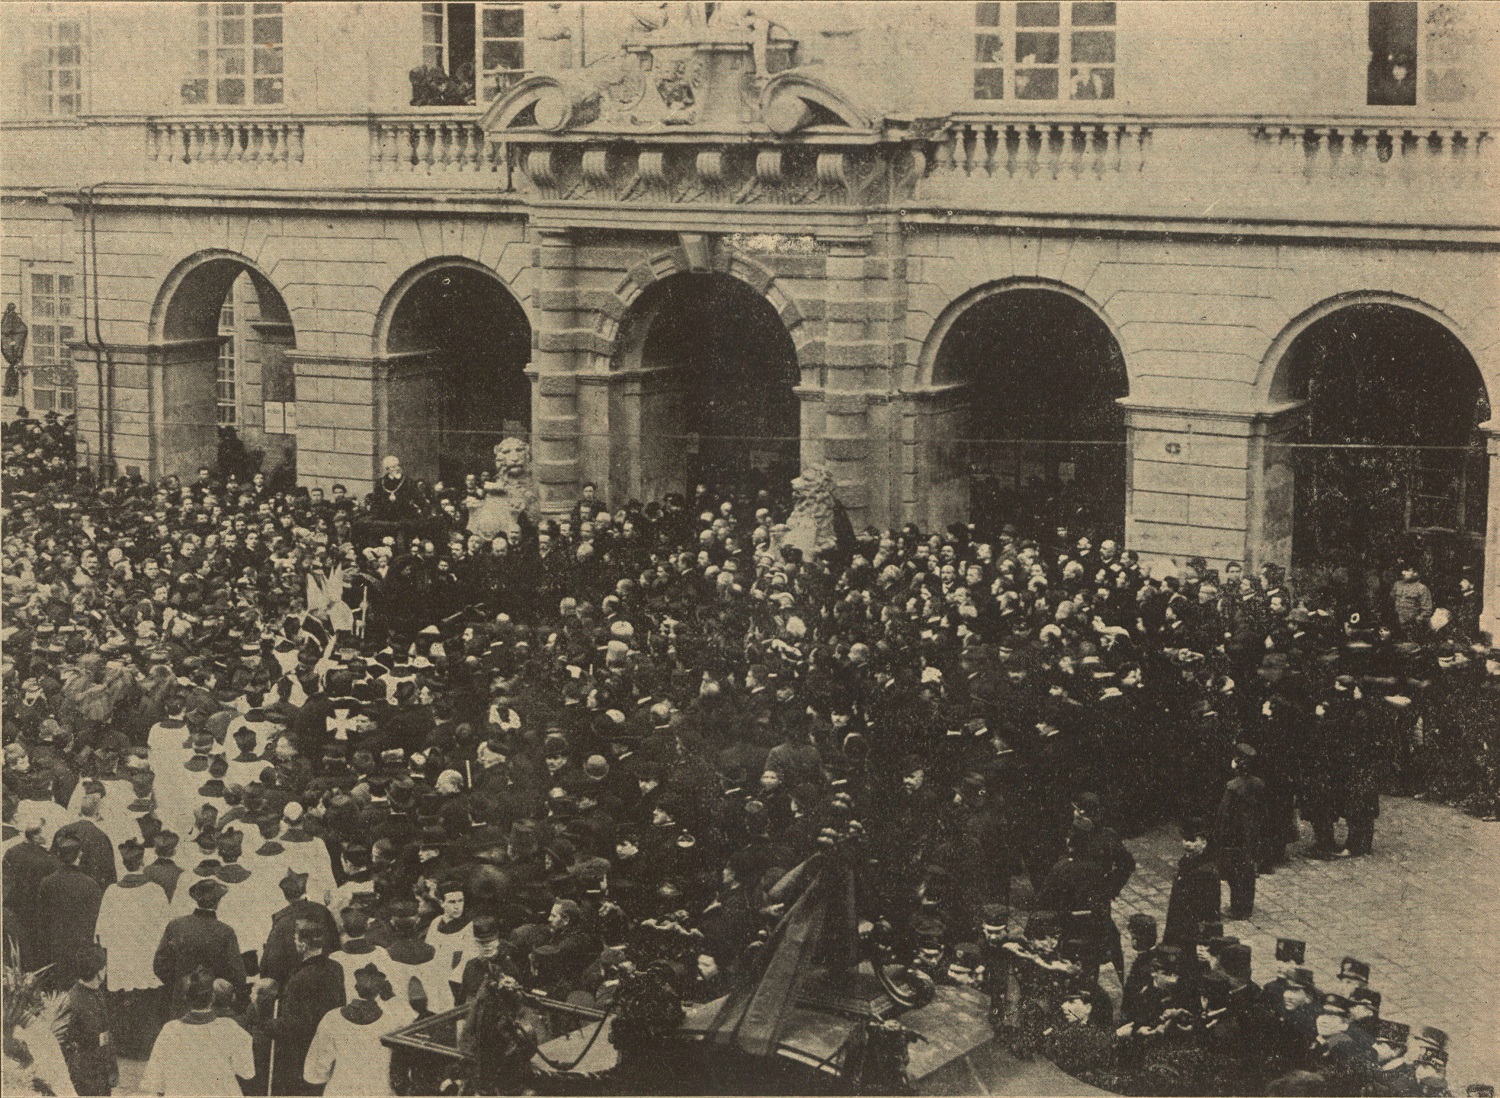 Tadeusz Rutowski's speech at the entrance to the City Hall